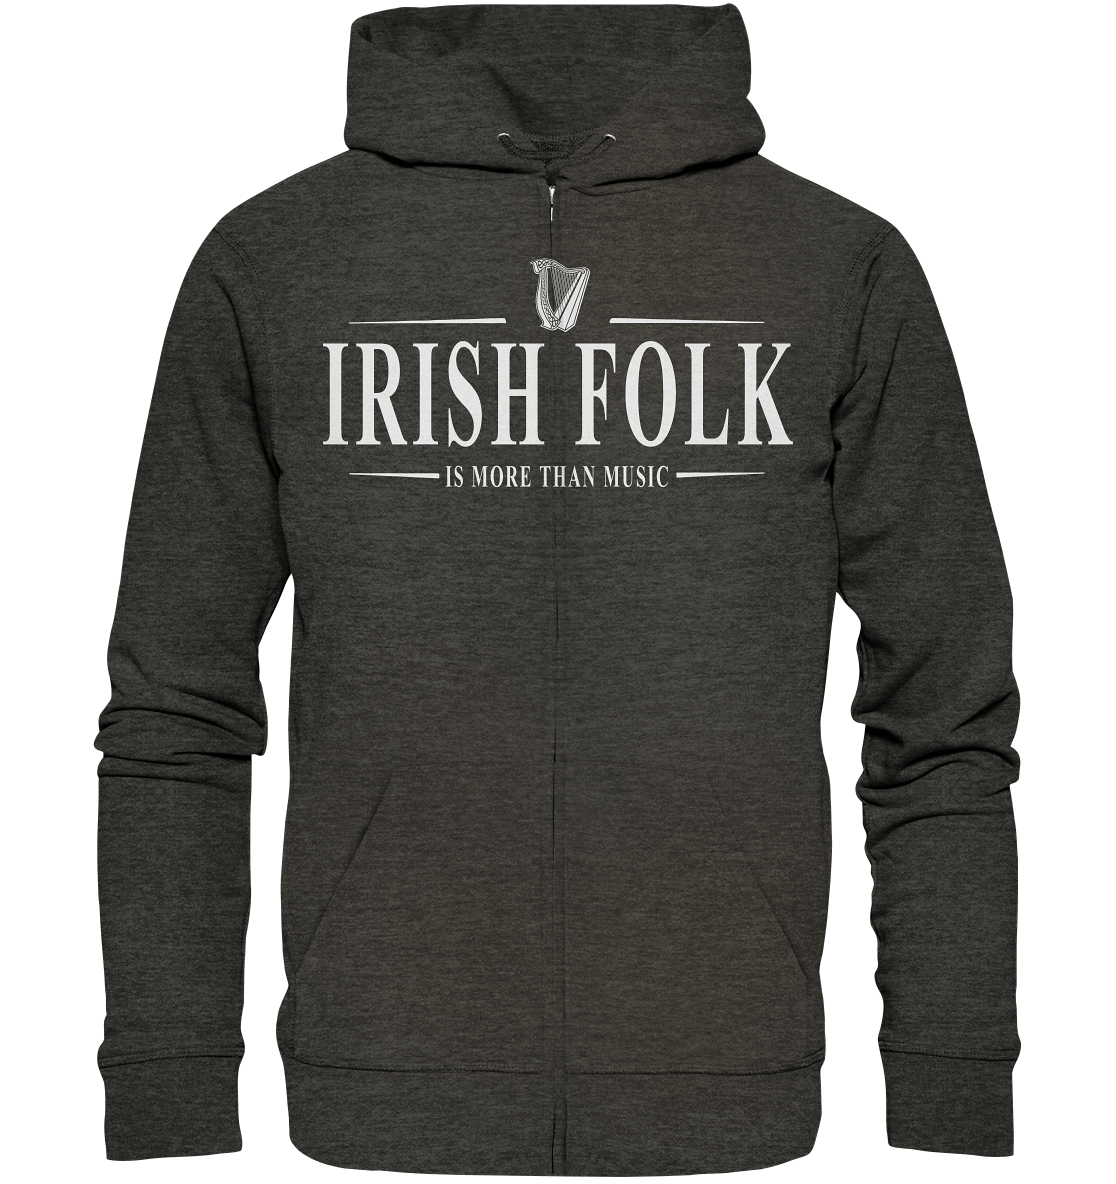 Irish Folk "Is More Than Music" - Organic Zipper